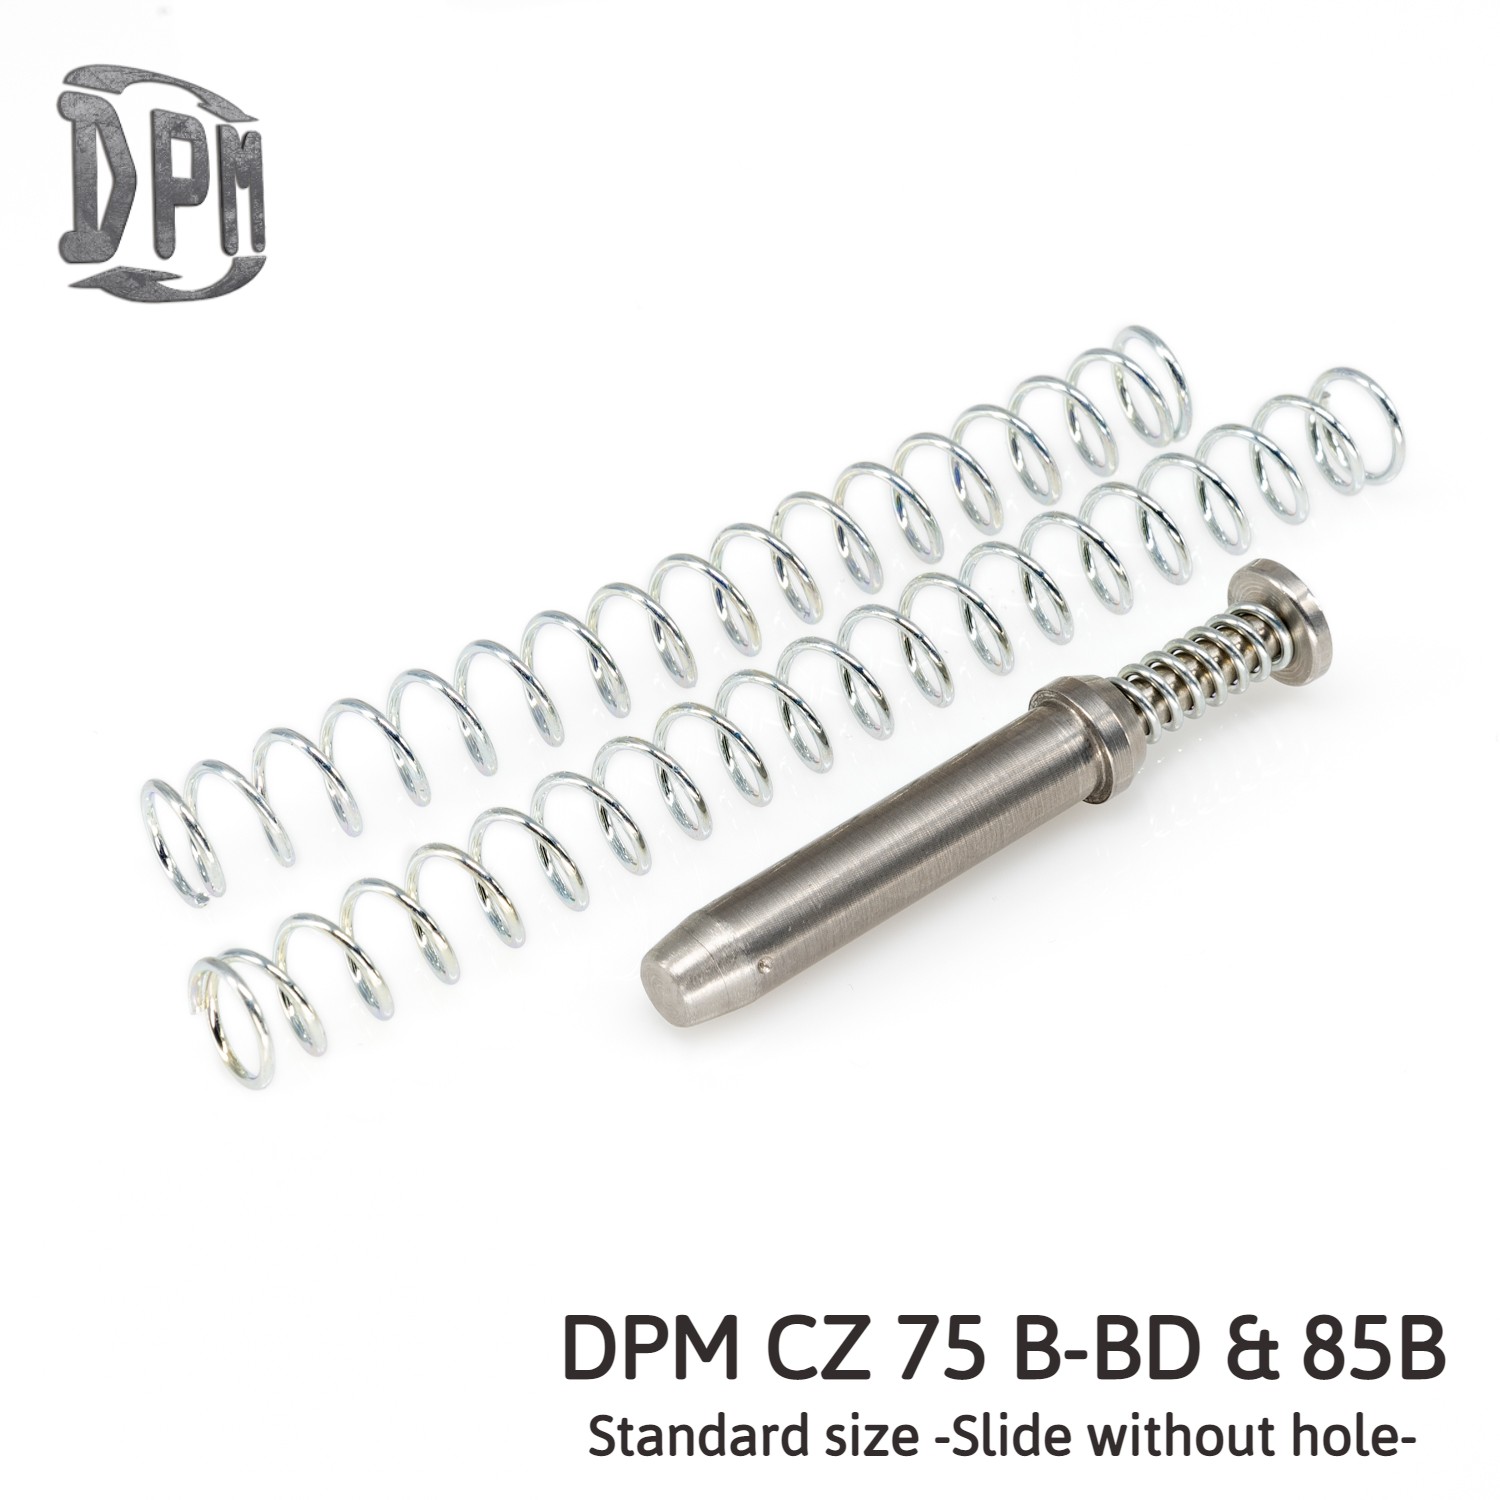 DPM CZ 75 B-BD & 85B Standard size - Slide without hole